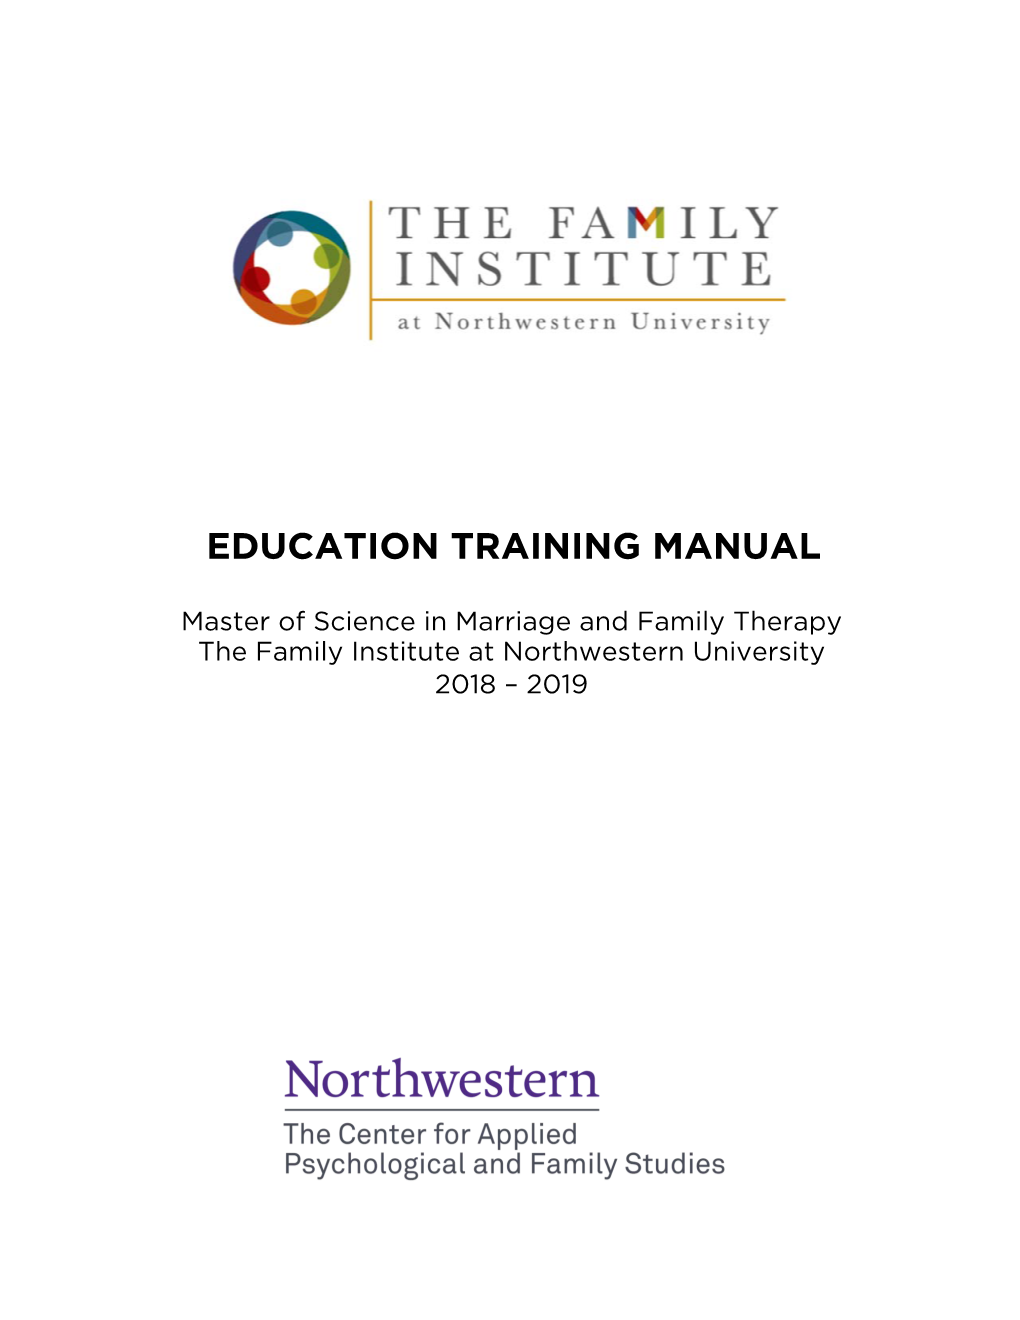 Education Training Manual